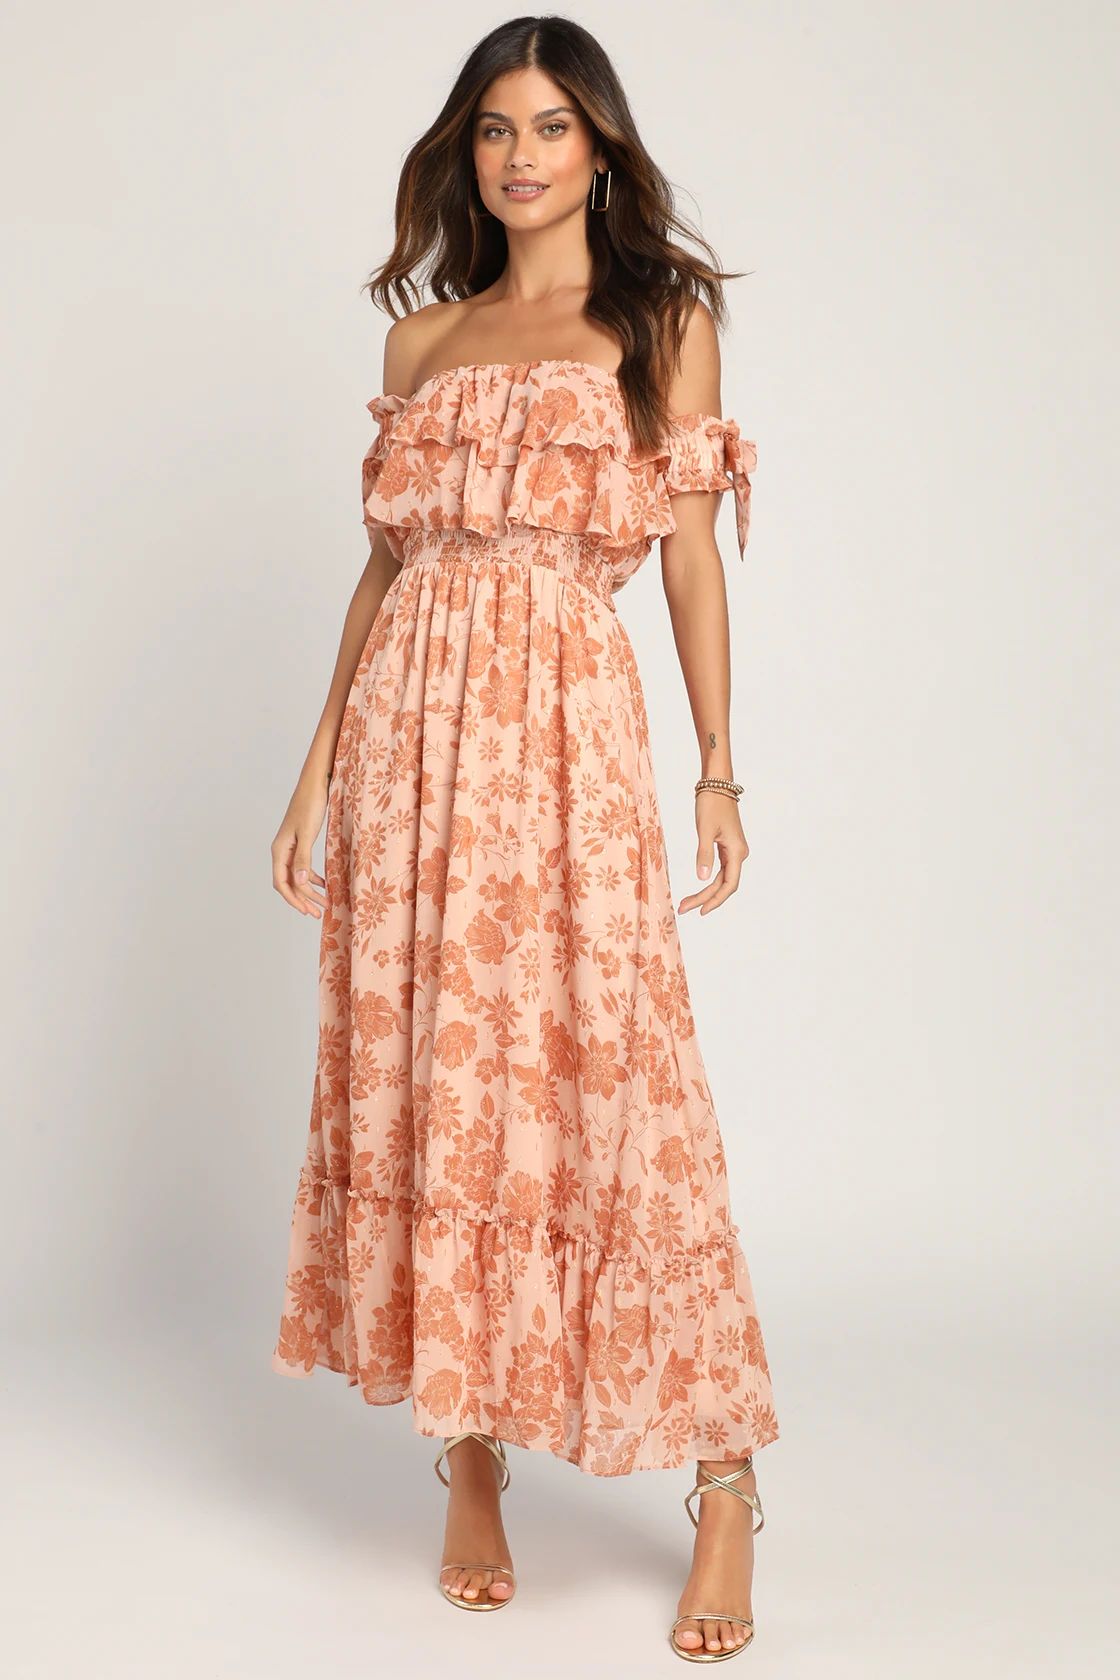 Love and Blooms Blush Floral Print Off-the-Shoulder Dress | Lulus (US)